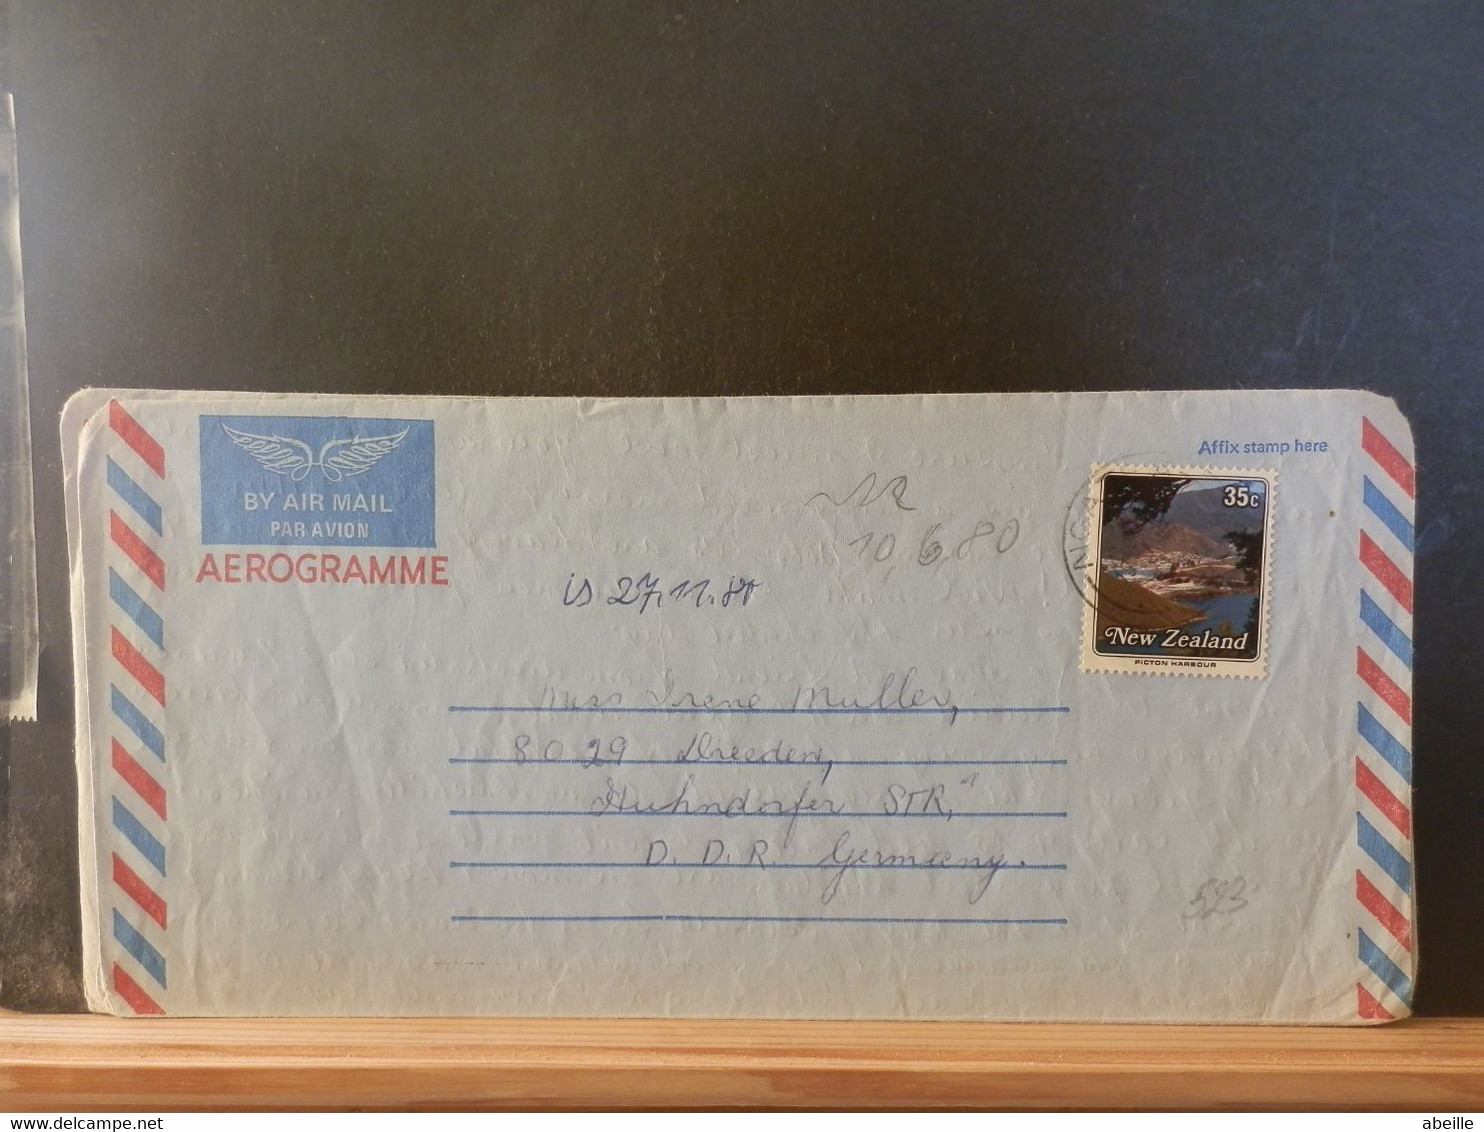 AEROGRAMME LOT 523: AEROGRAMME NEW ZEALAND - Postal Stationery